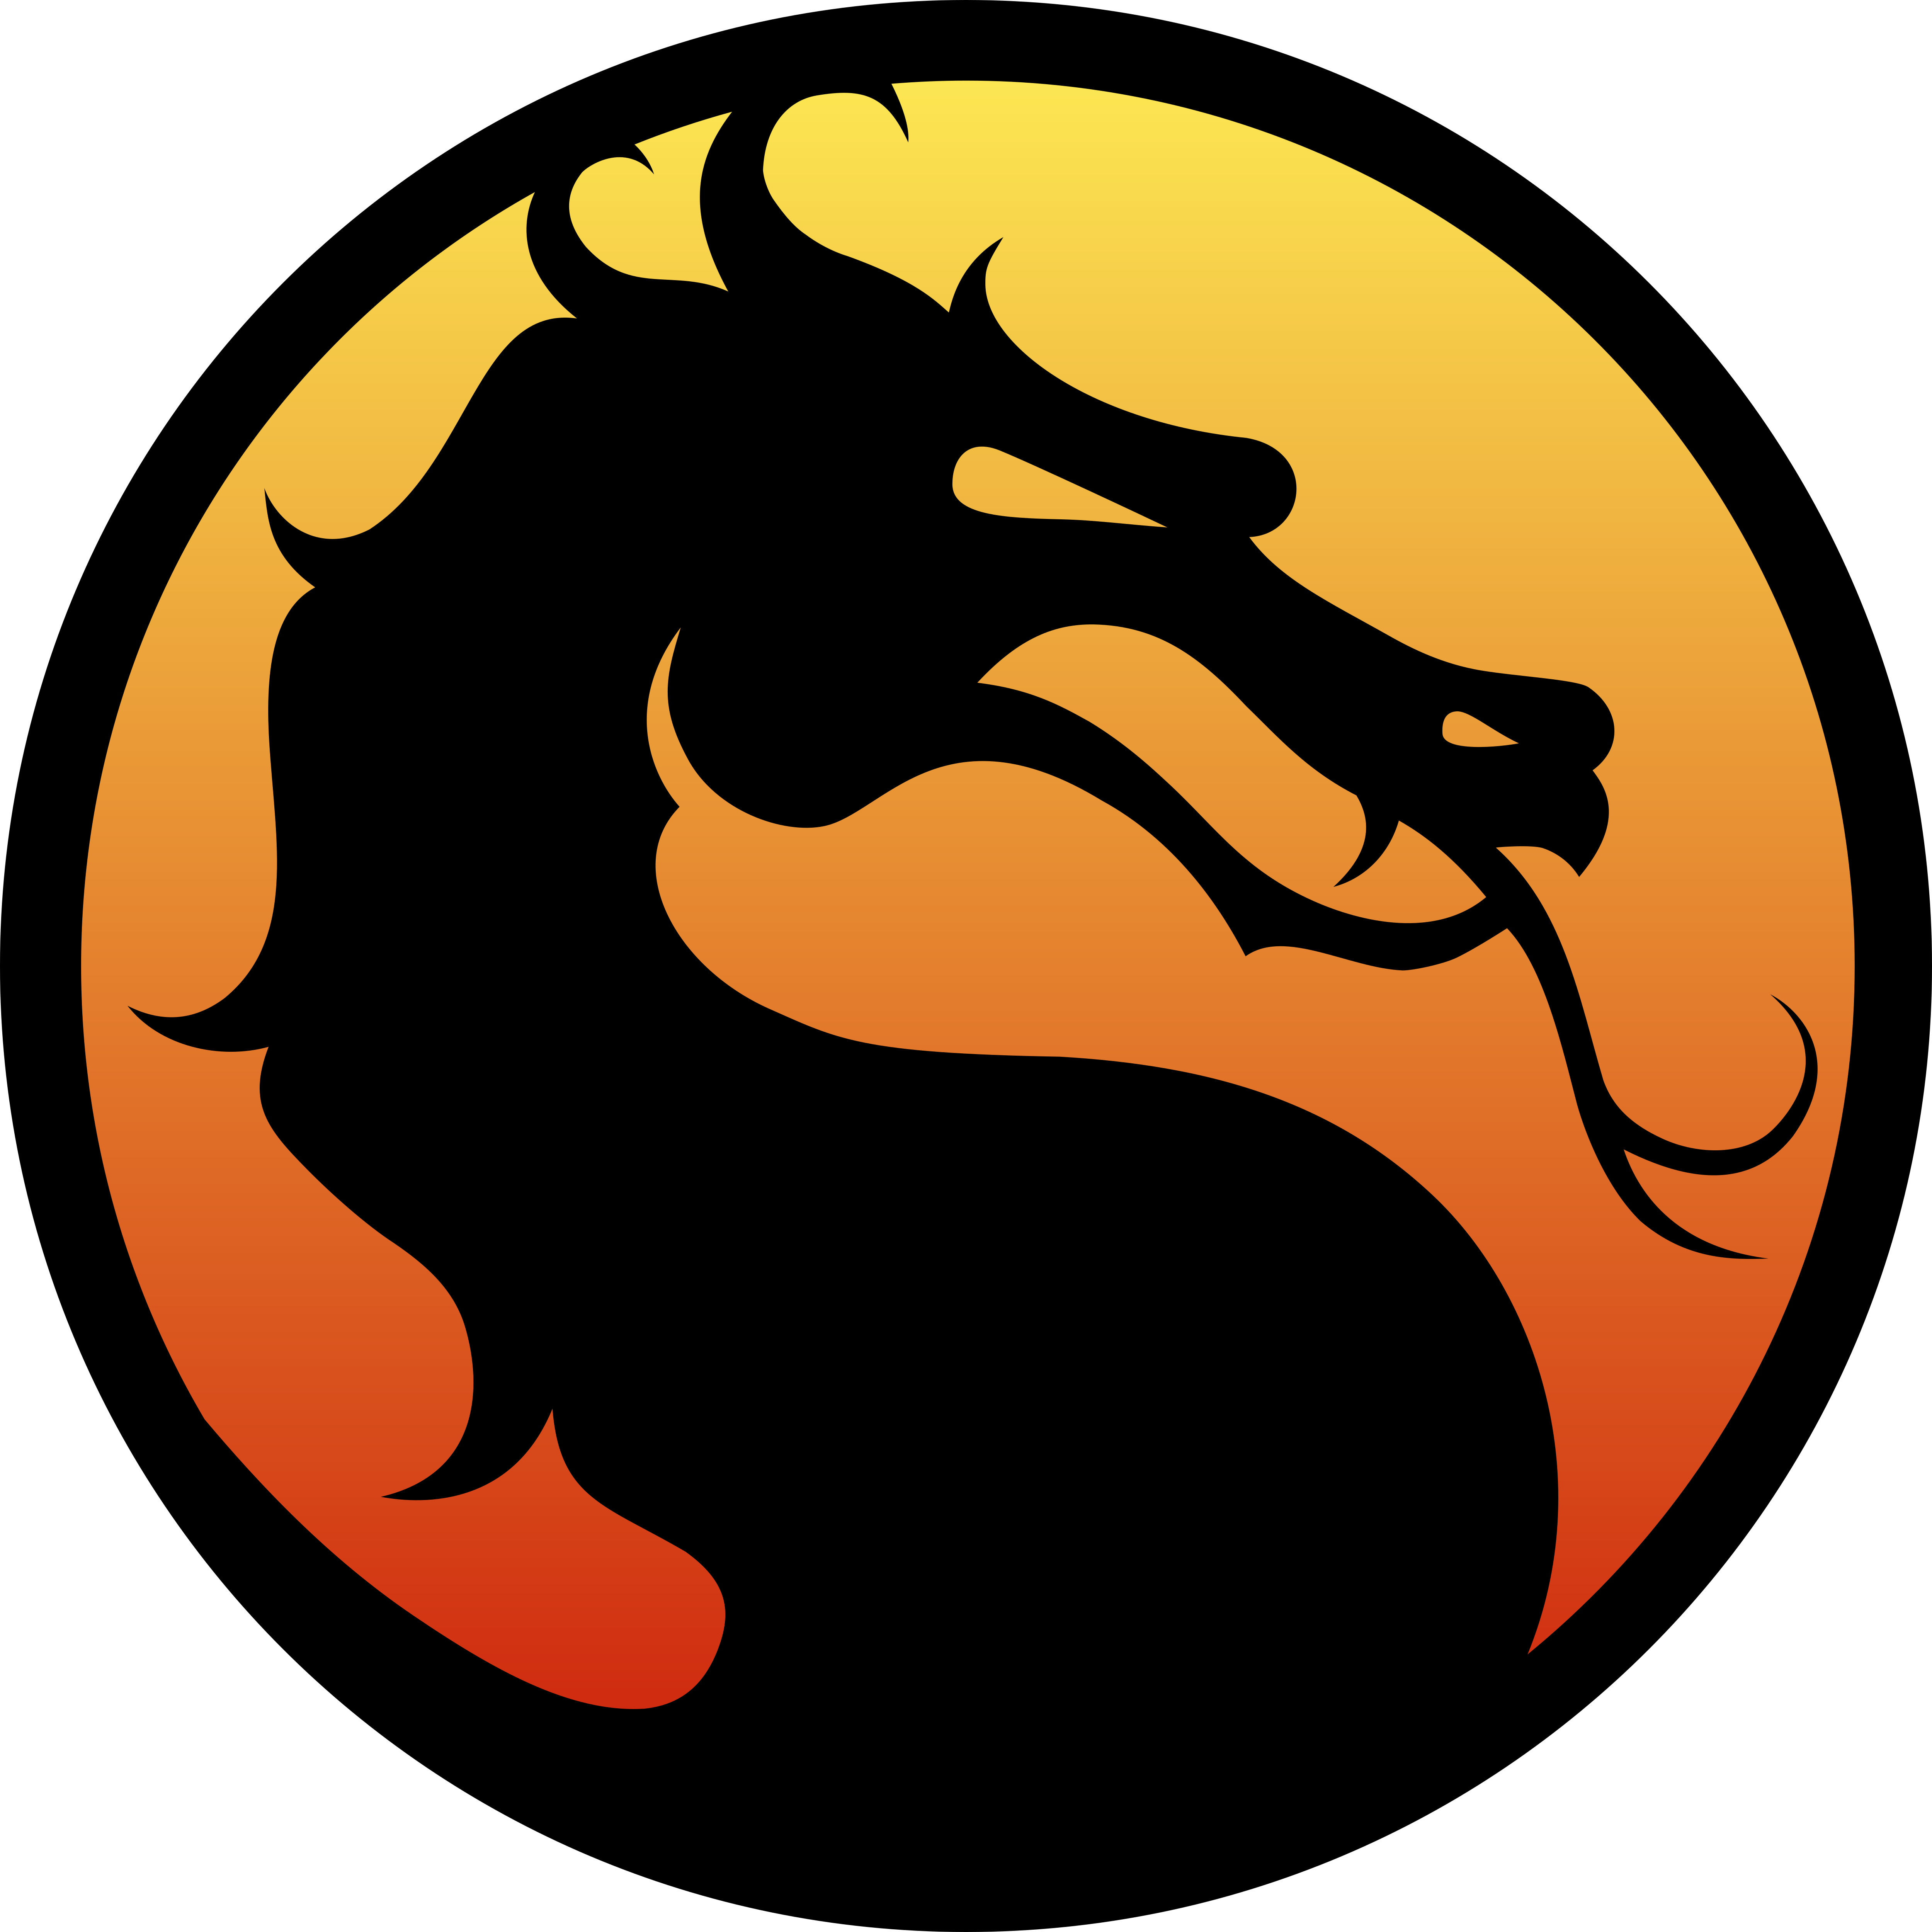 Mortal Kombat - New Era Logo by LyriumRogue on DeviantArt